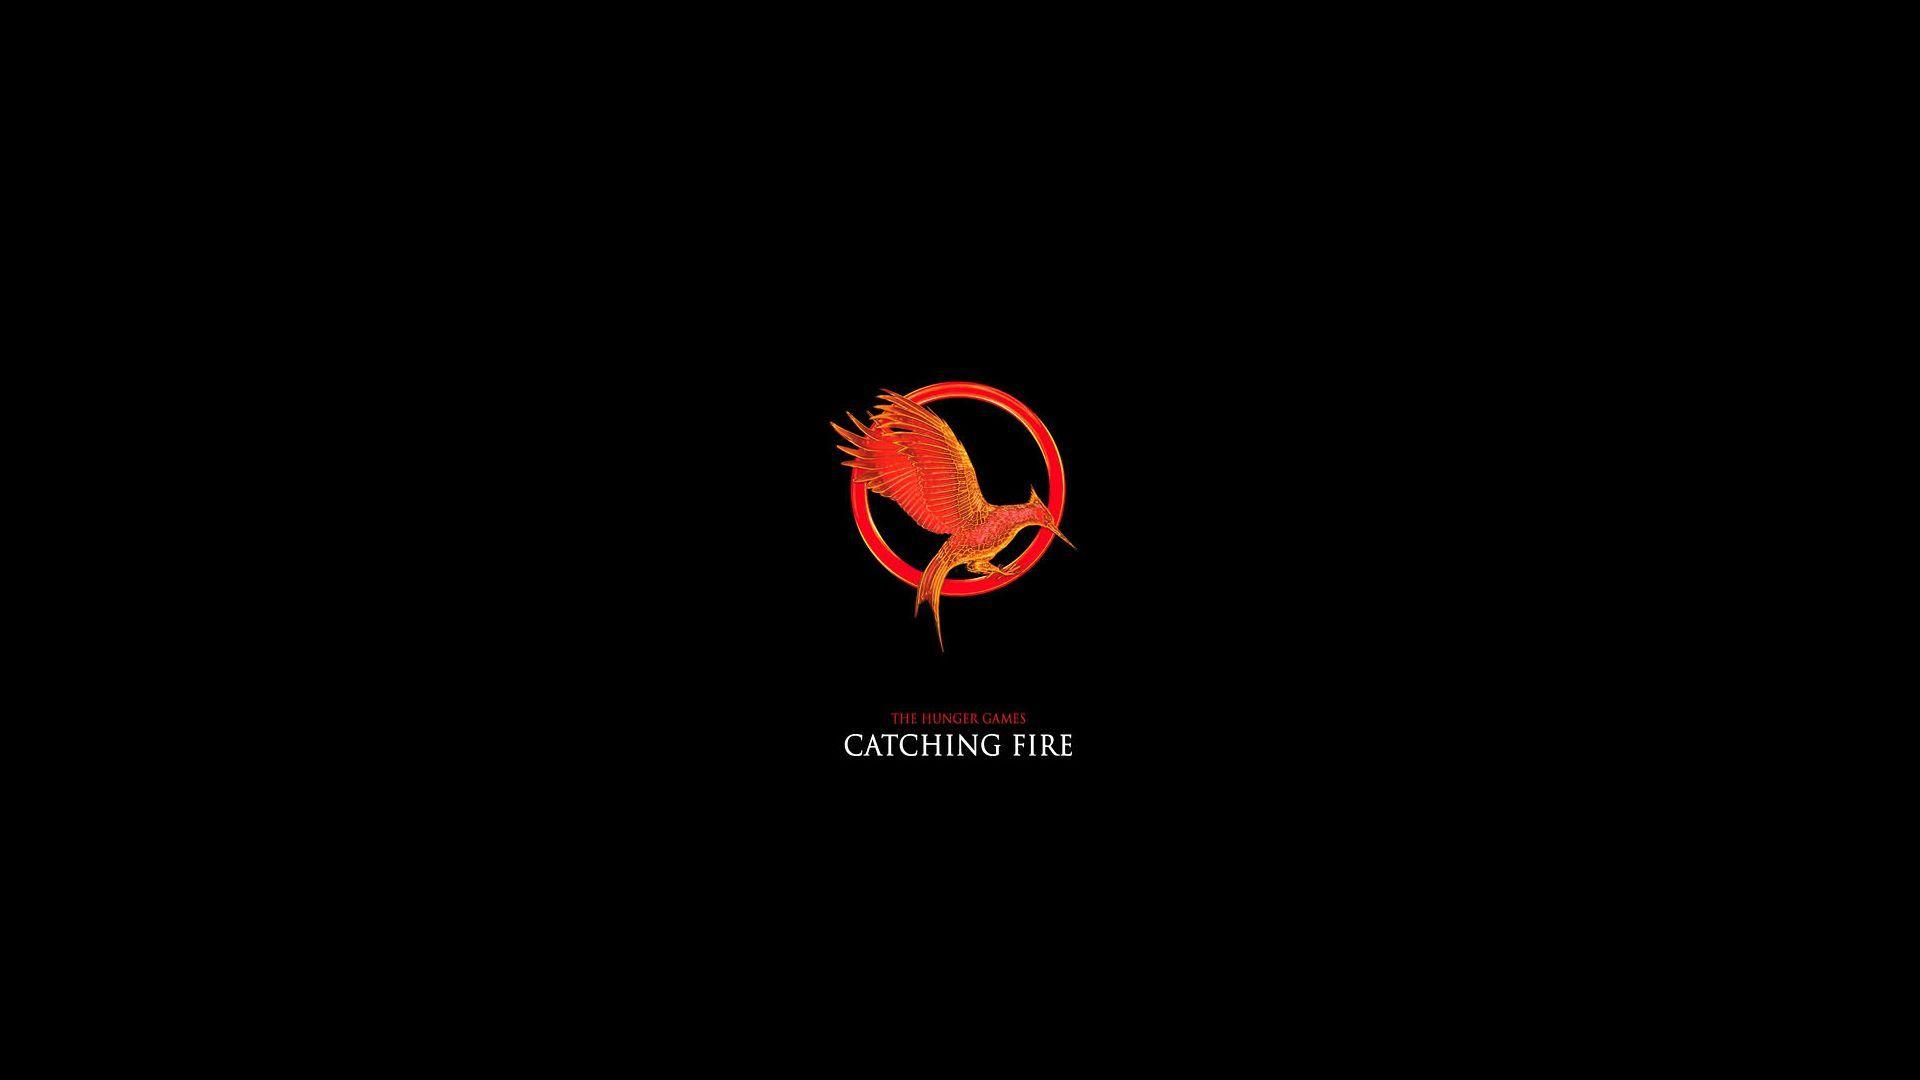 Hunger Games Catching Fire Logo Picture 5 HD Wallpapercom